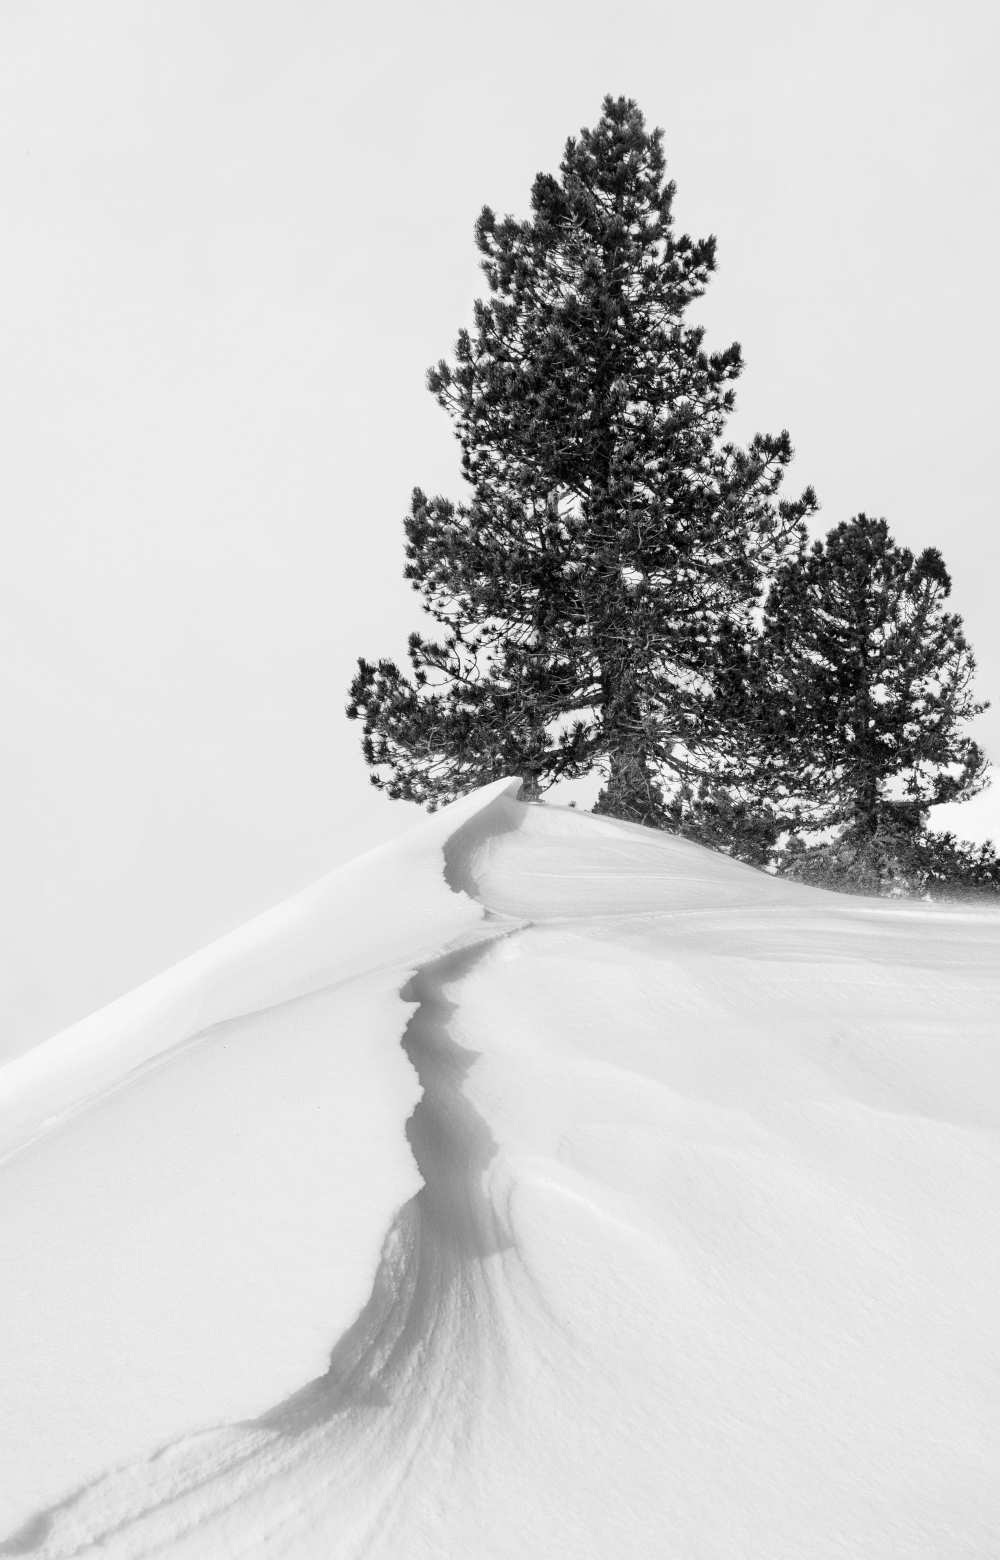 About the snow and forms from Rodrigo Núñez Buj